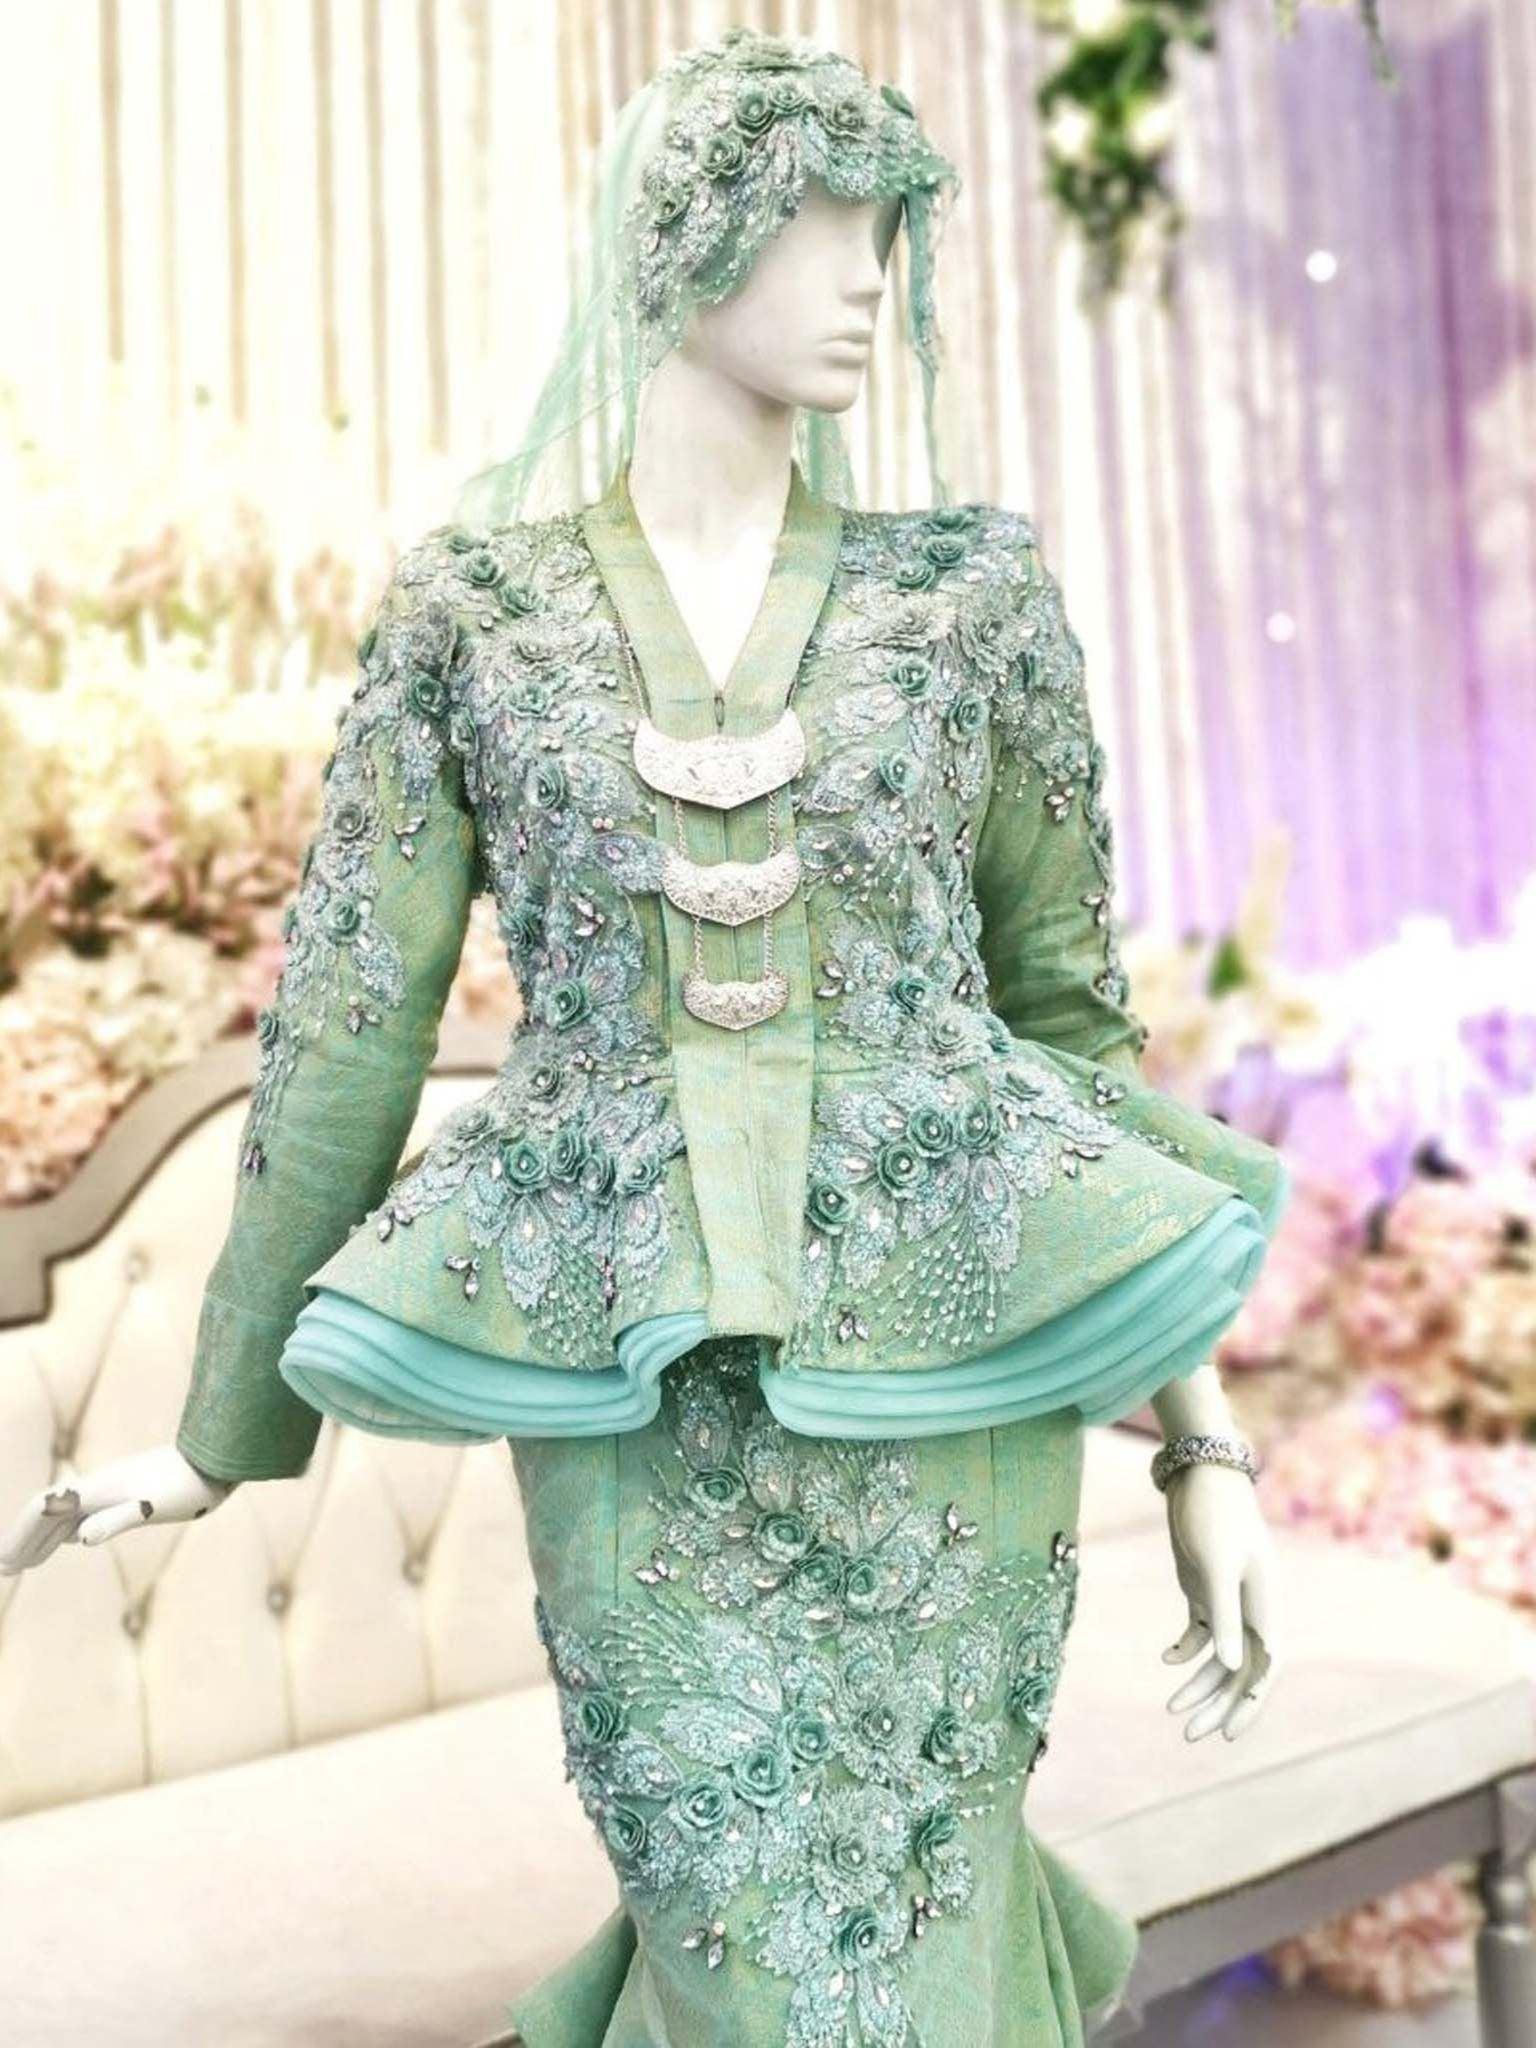 MEDUSA - Radiant Two-Piece Peplum Songket Wedding Dress in Mint Green and Light Gold from PP Signature Bridal Boutique-Tempah Baju Pengantin online 